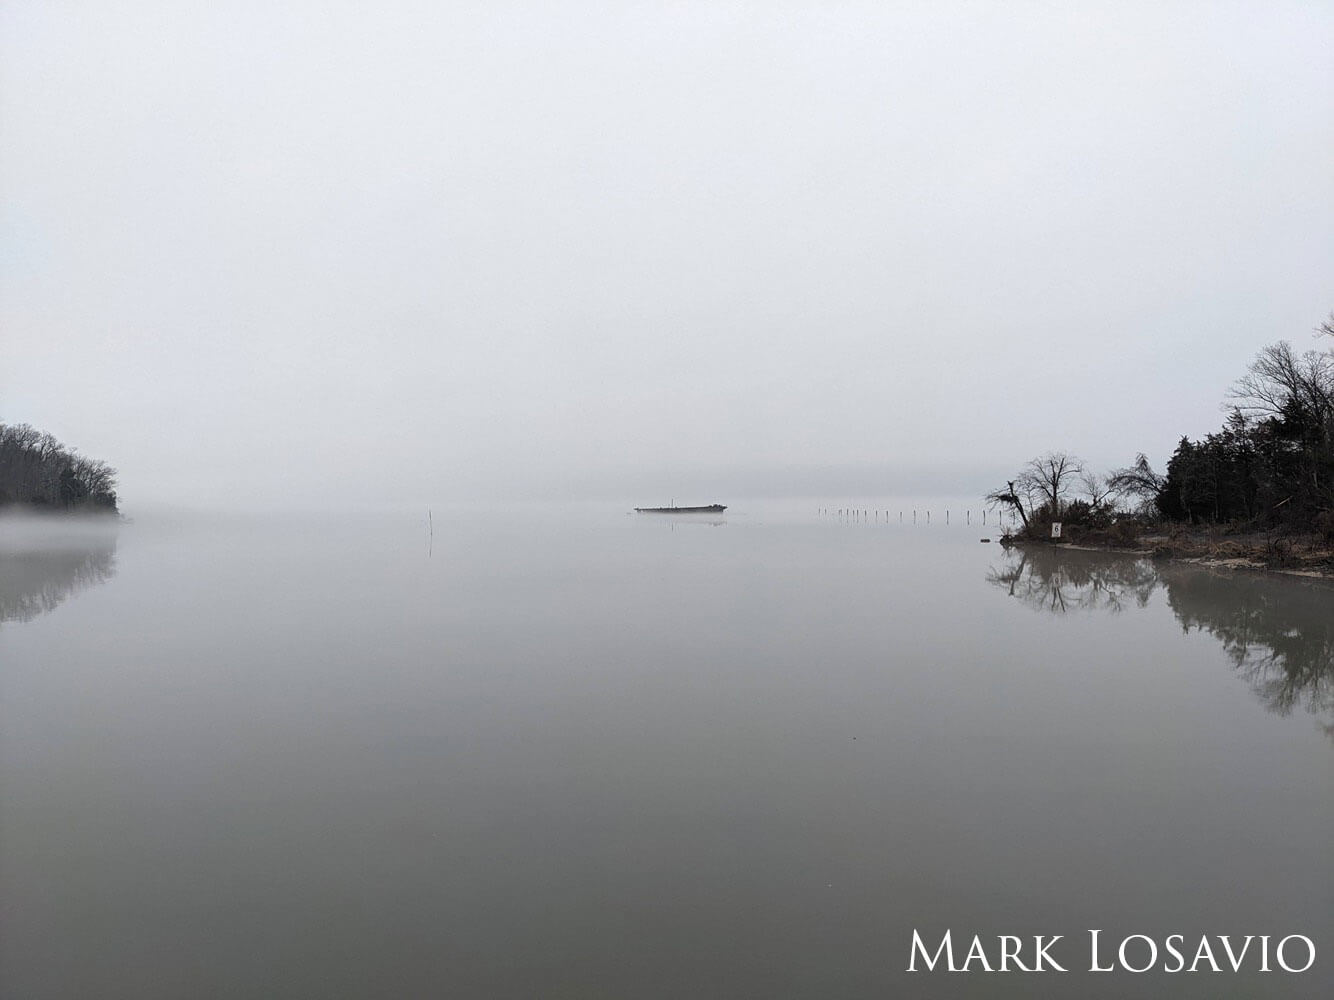 A lone wreck in the fog.